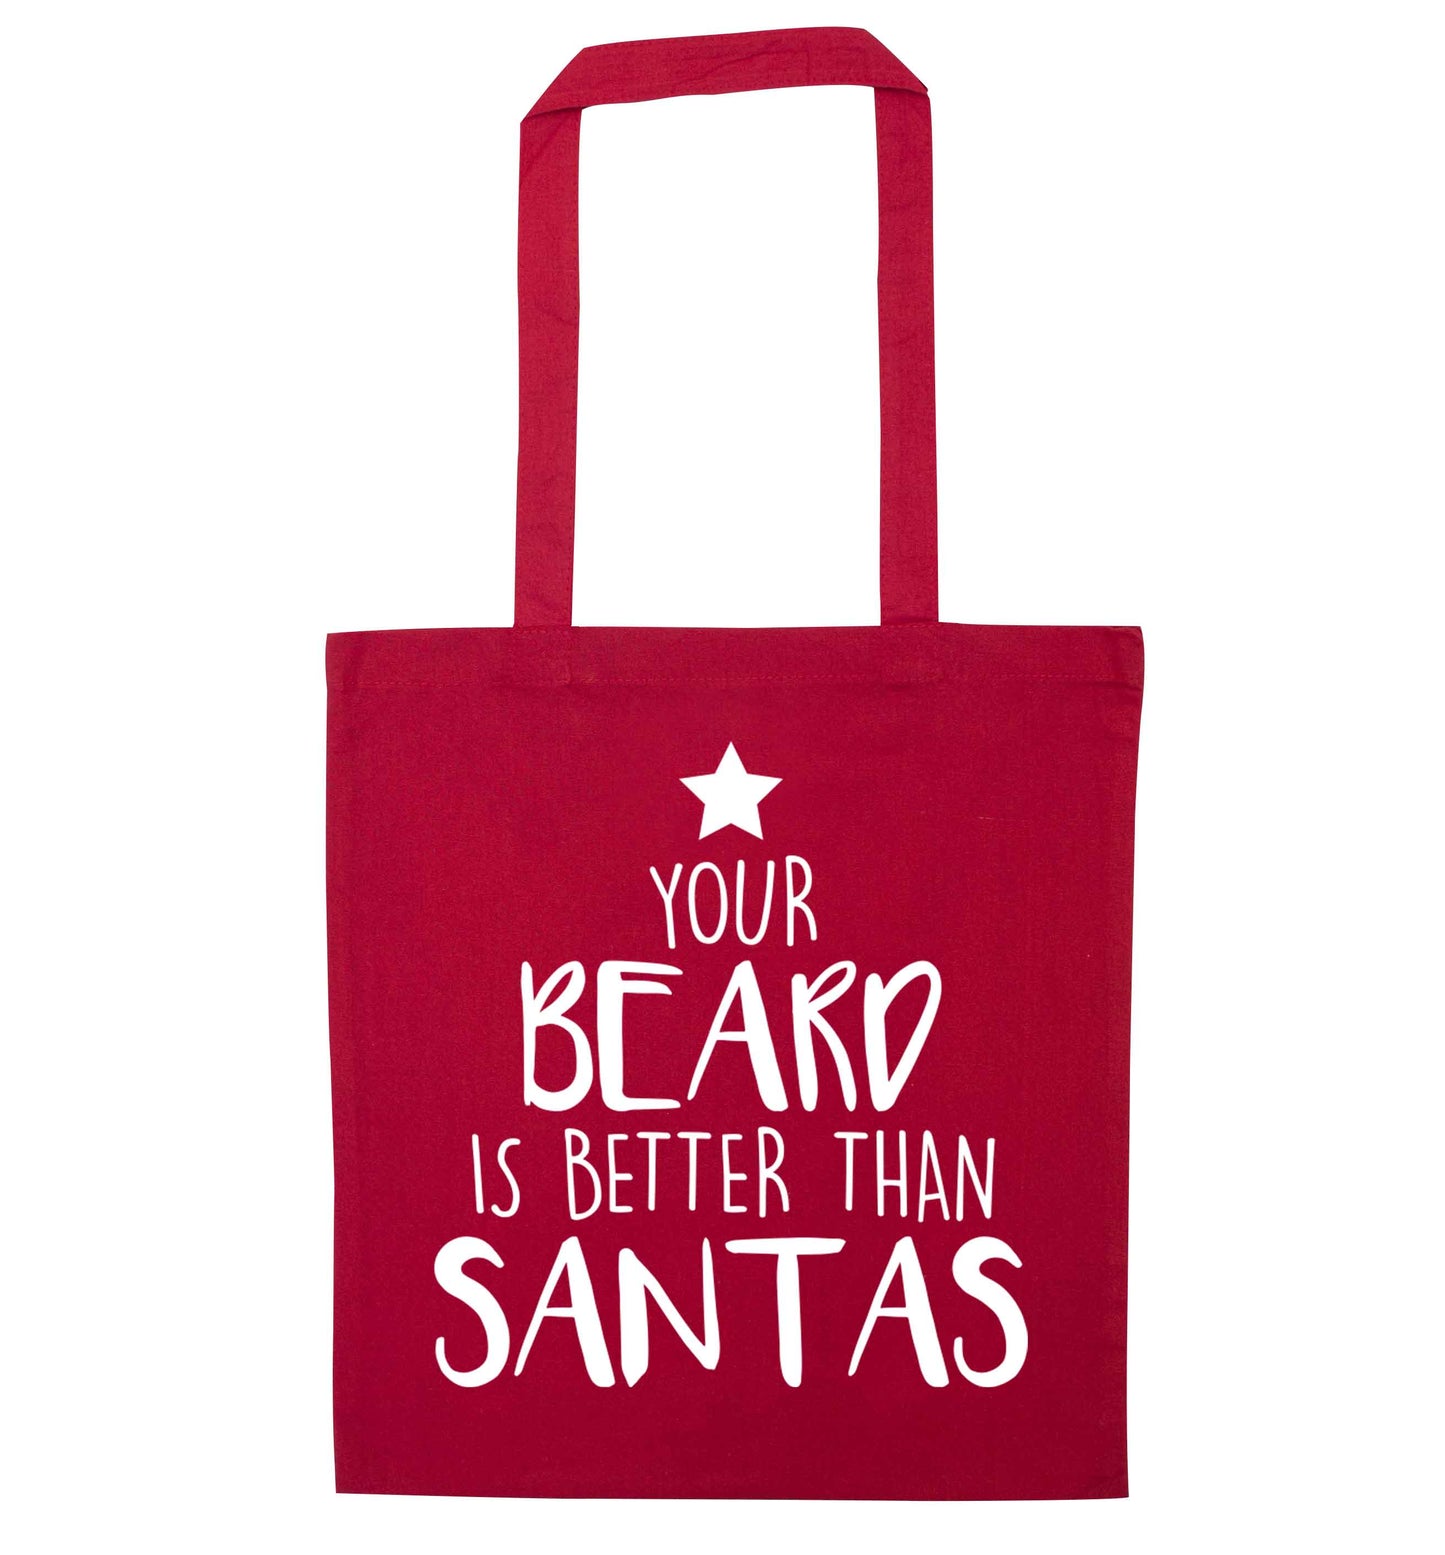 Your Beard Better than Santas red tote bag